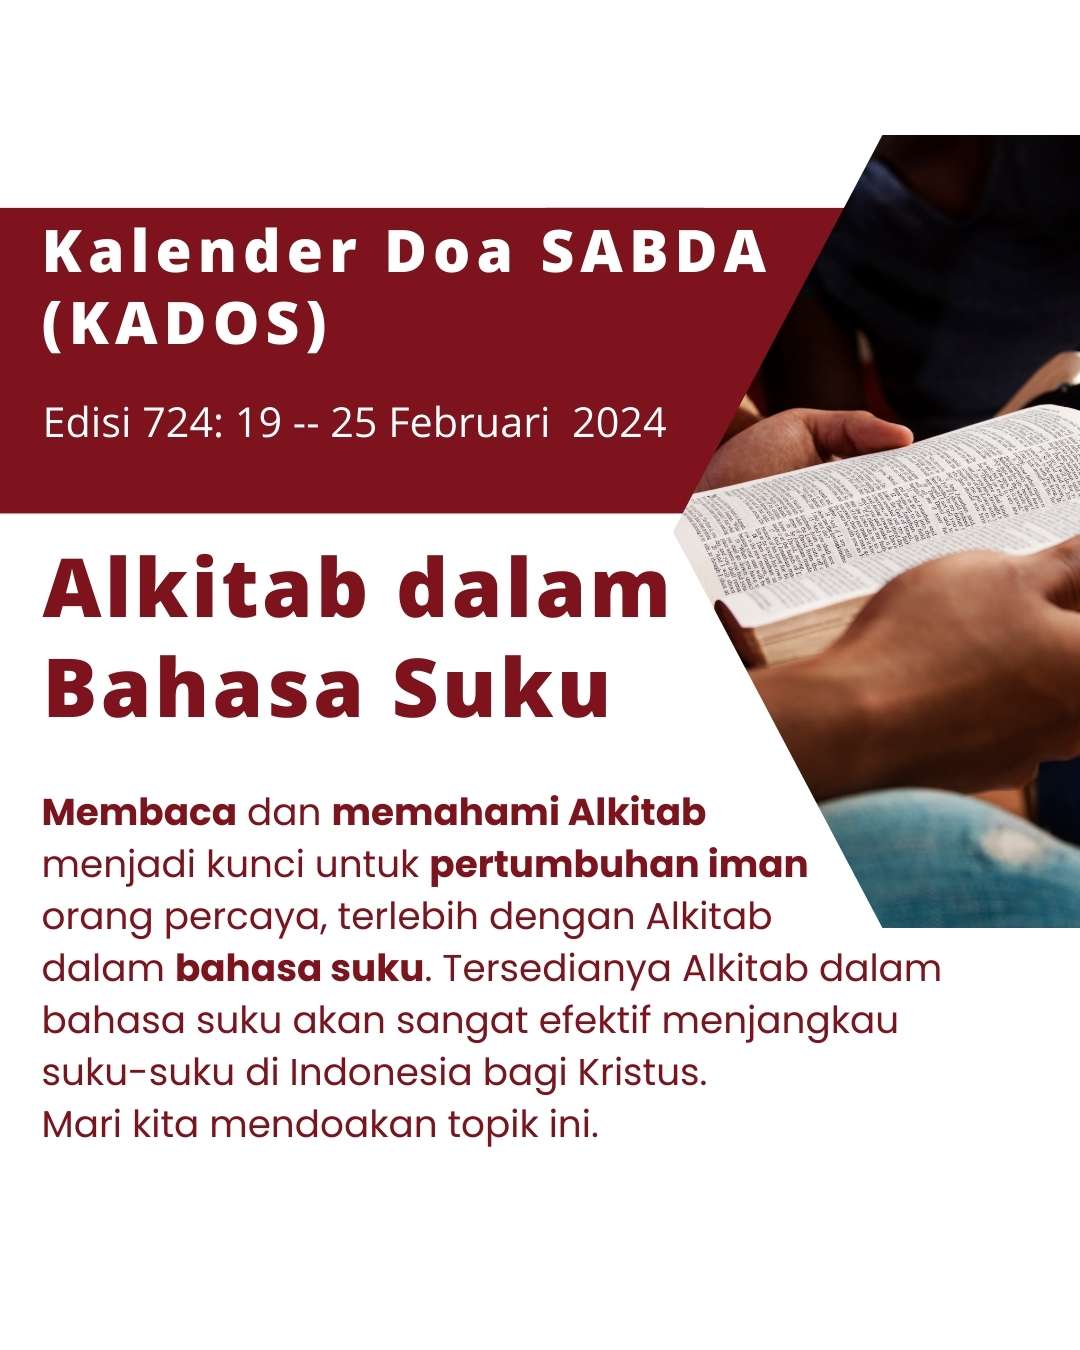 Pokok Doa KADOS 19 -- 25 Februari 2024